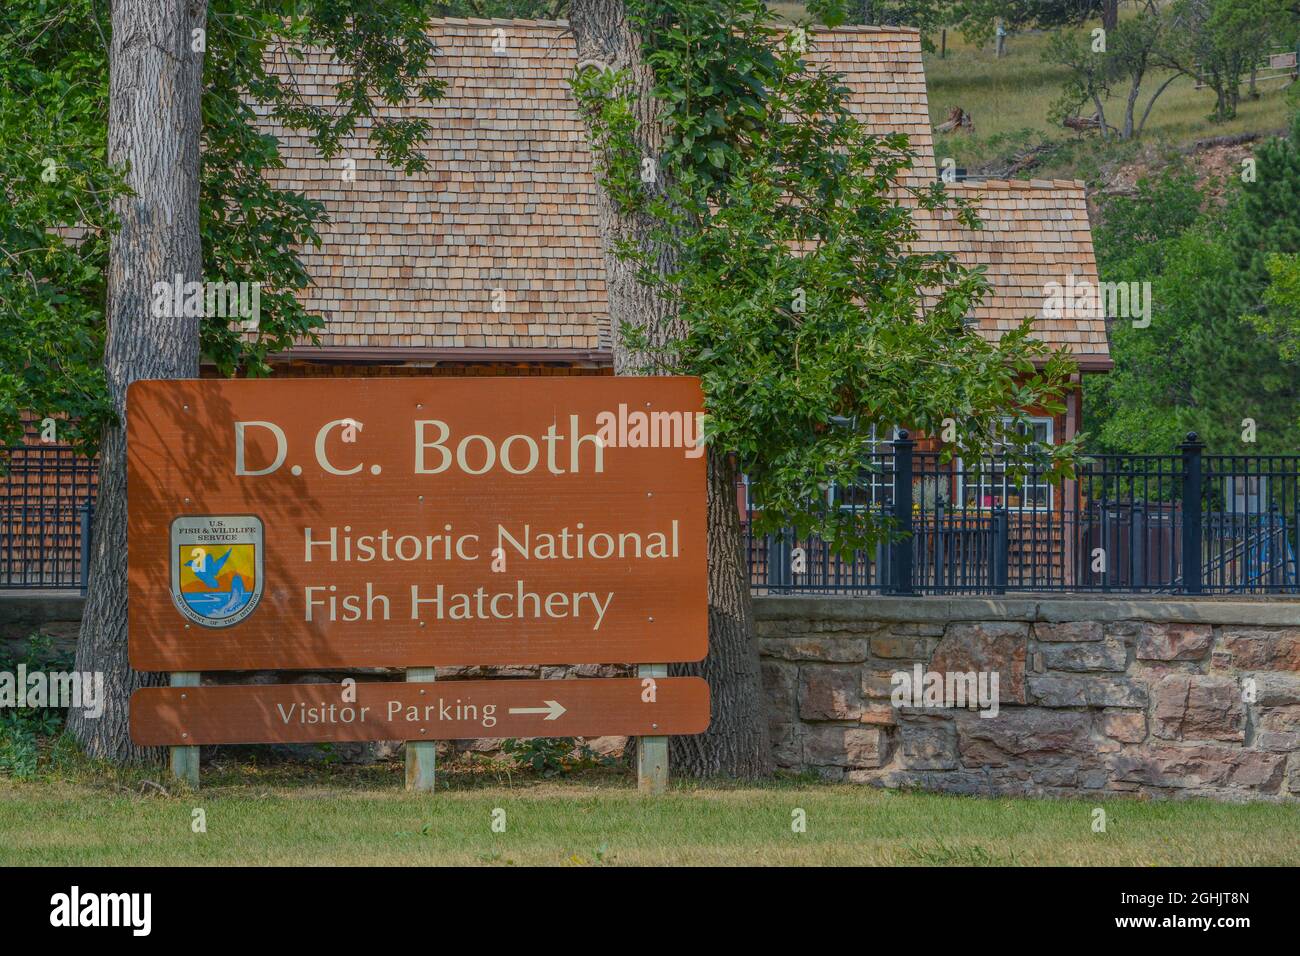 Il cartello per D. C. Booth Historic National Fish Hatchery a Spearfish, South Dakota Foto Stock